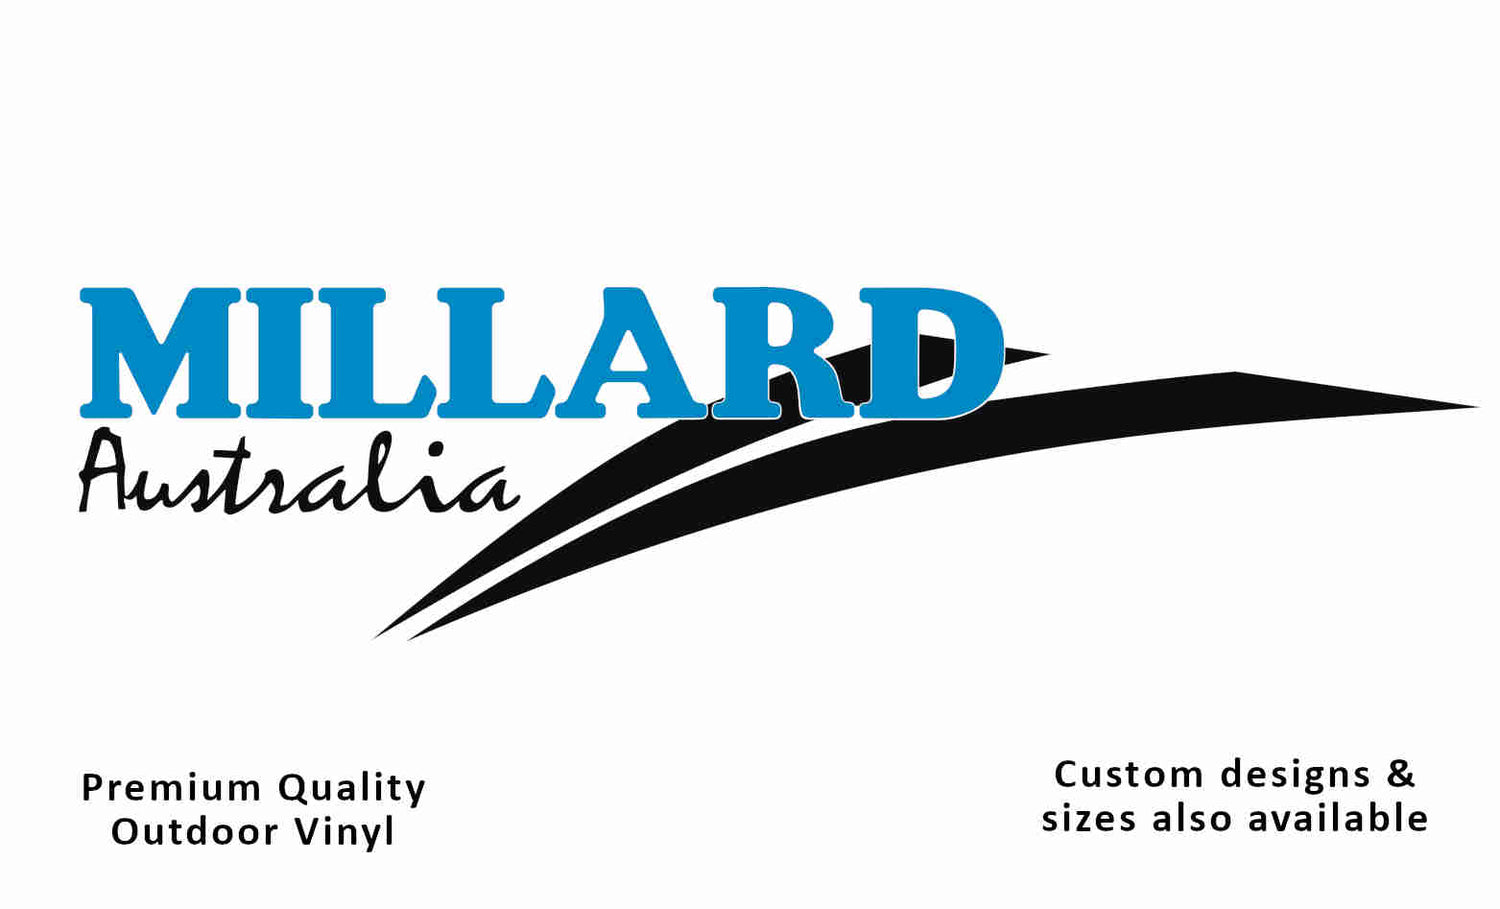 Millard Australia caravan vinyl replacement decal sticker in black and light-blue.